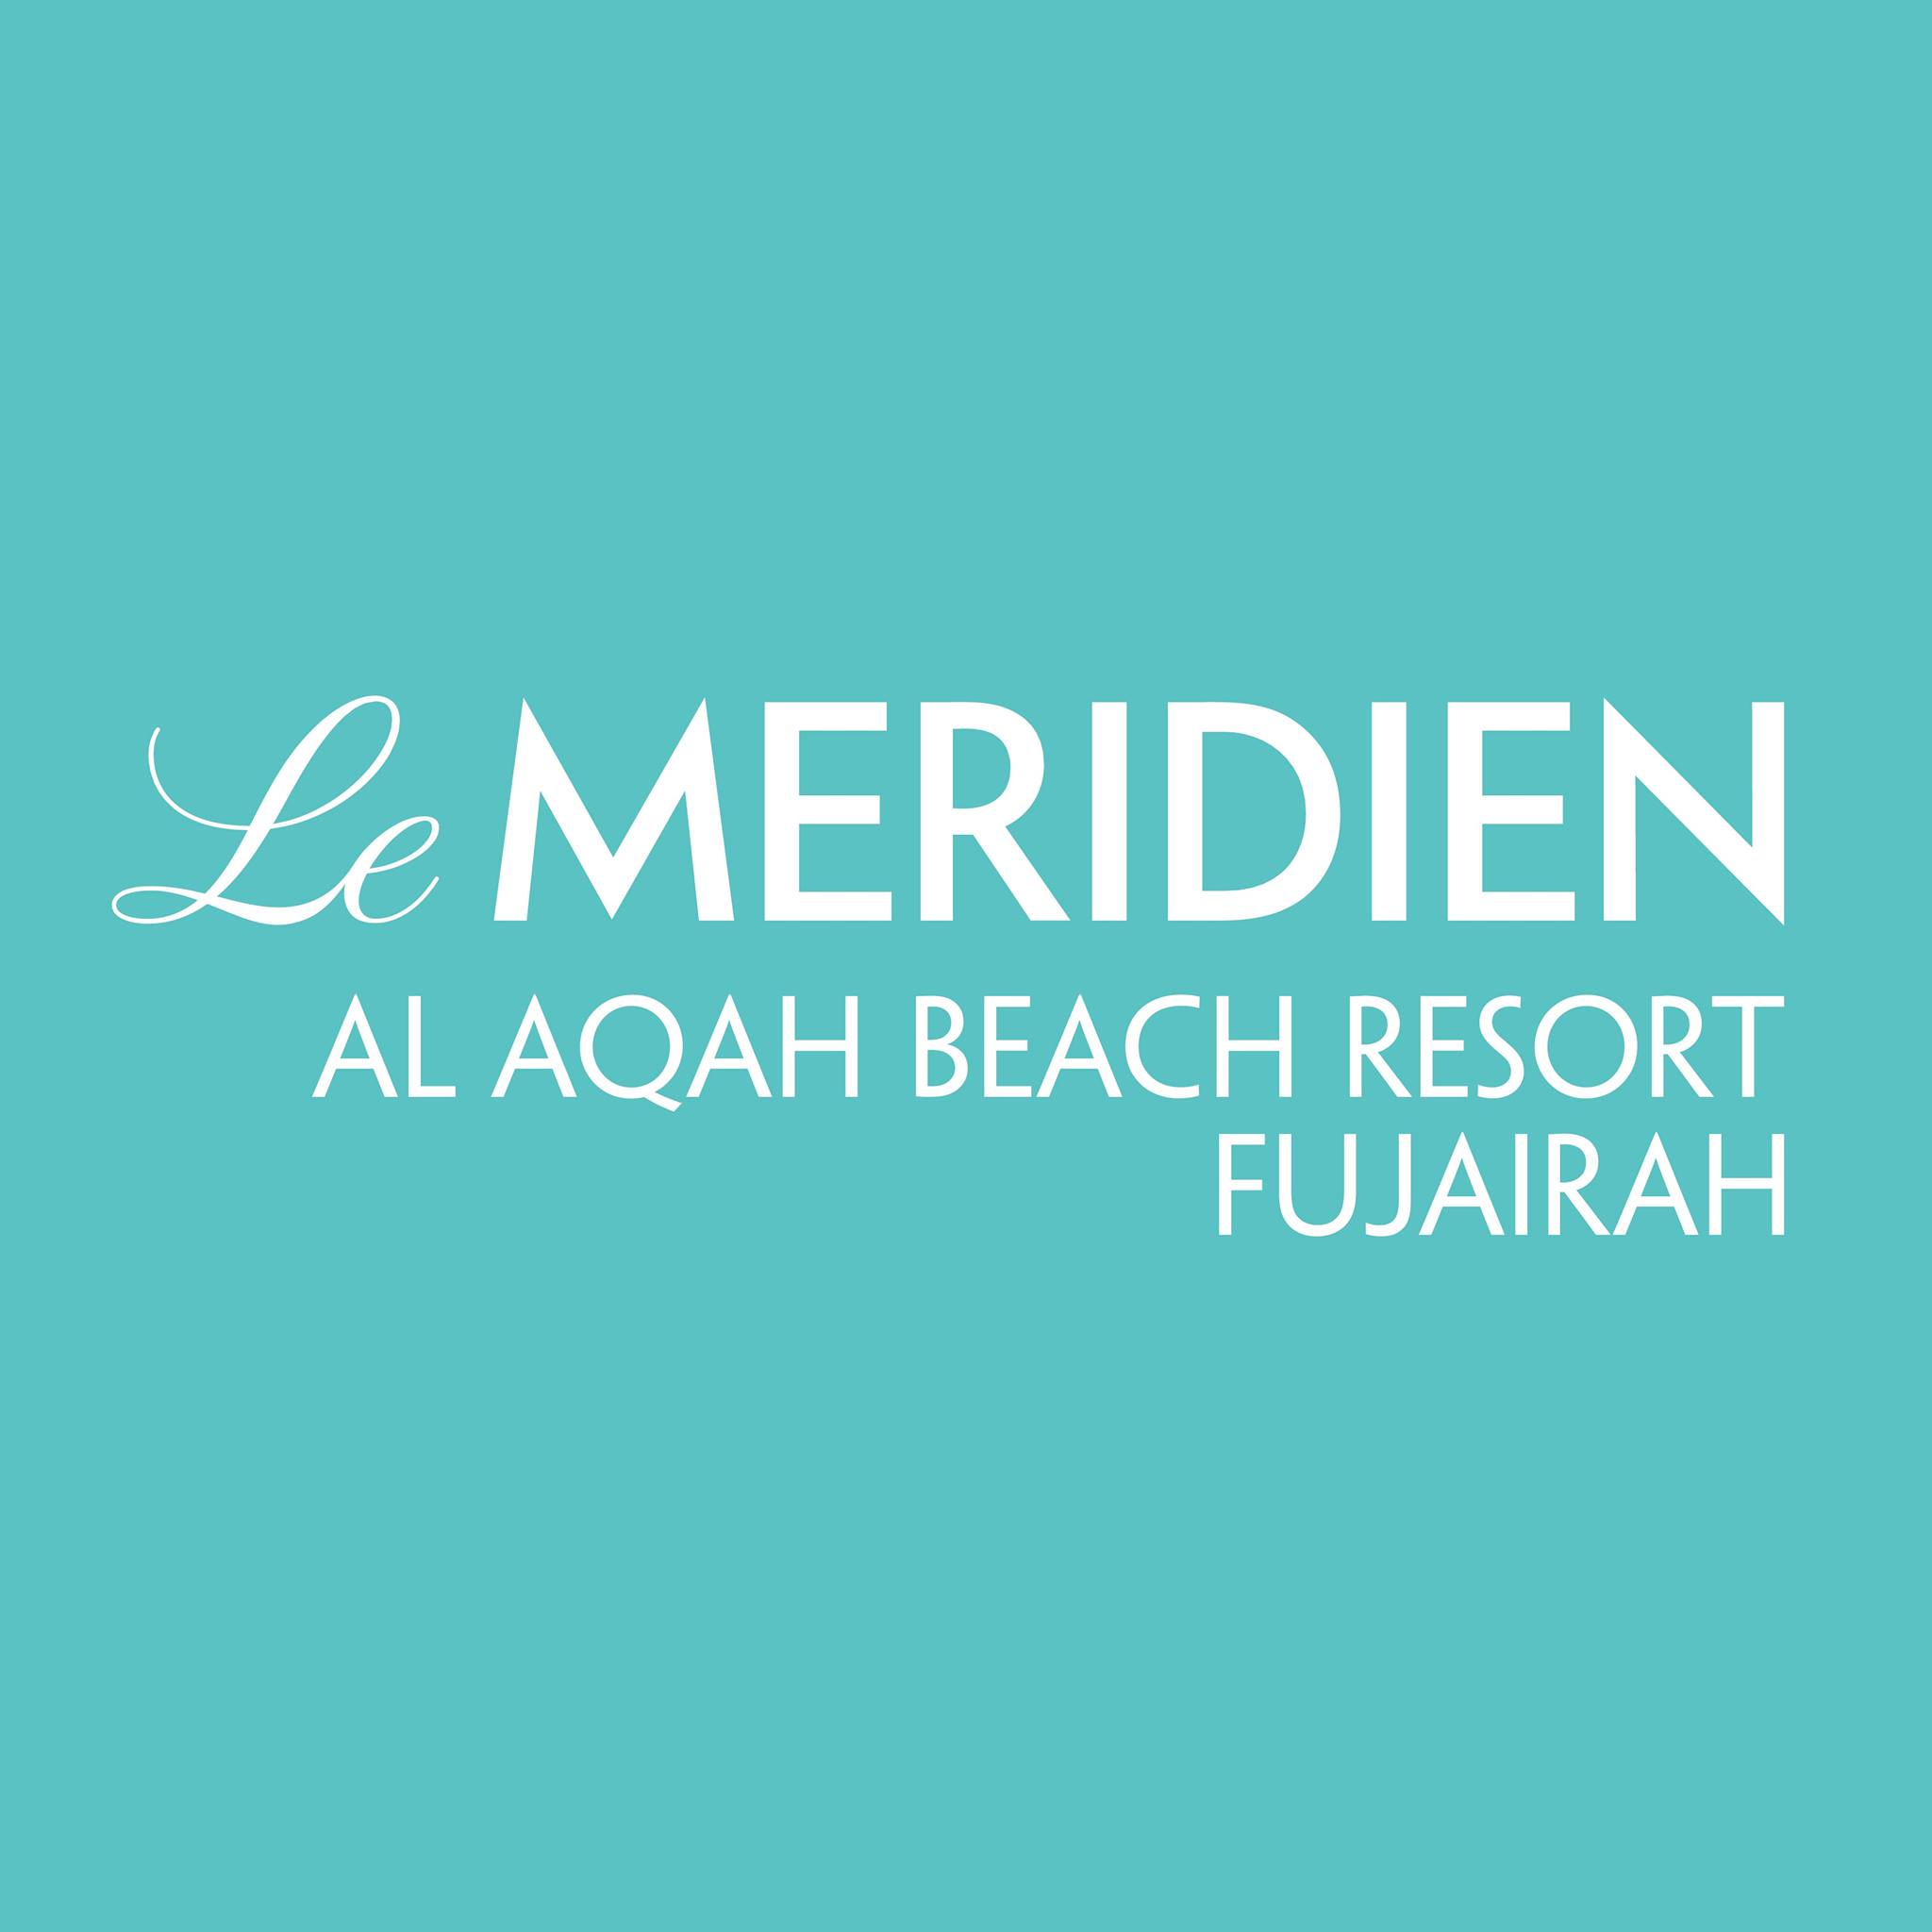 Le Méridien Al Aqah Beach Resort, Fujairah, UAE